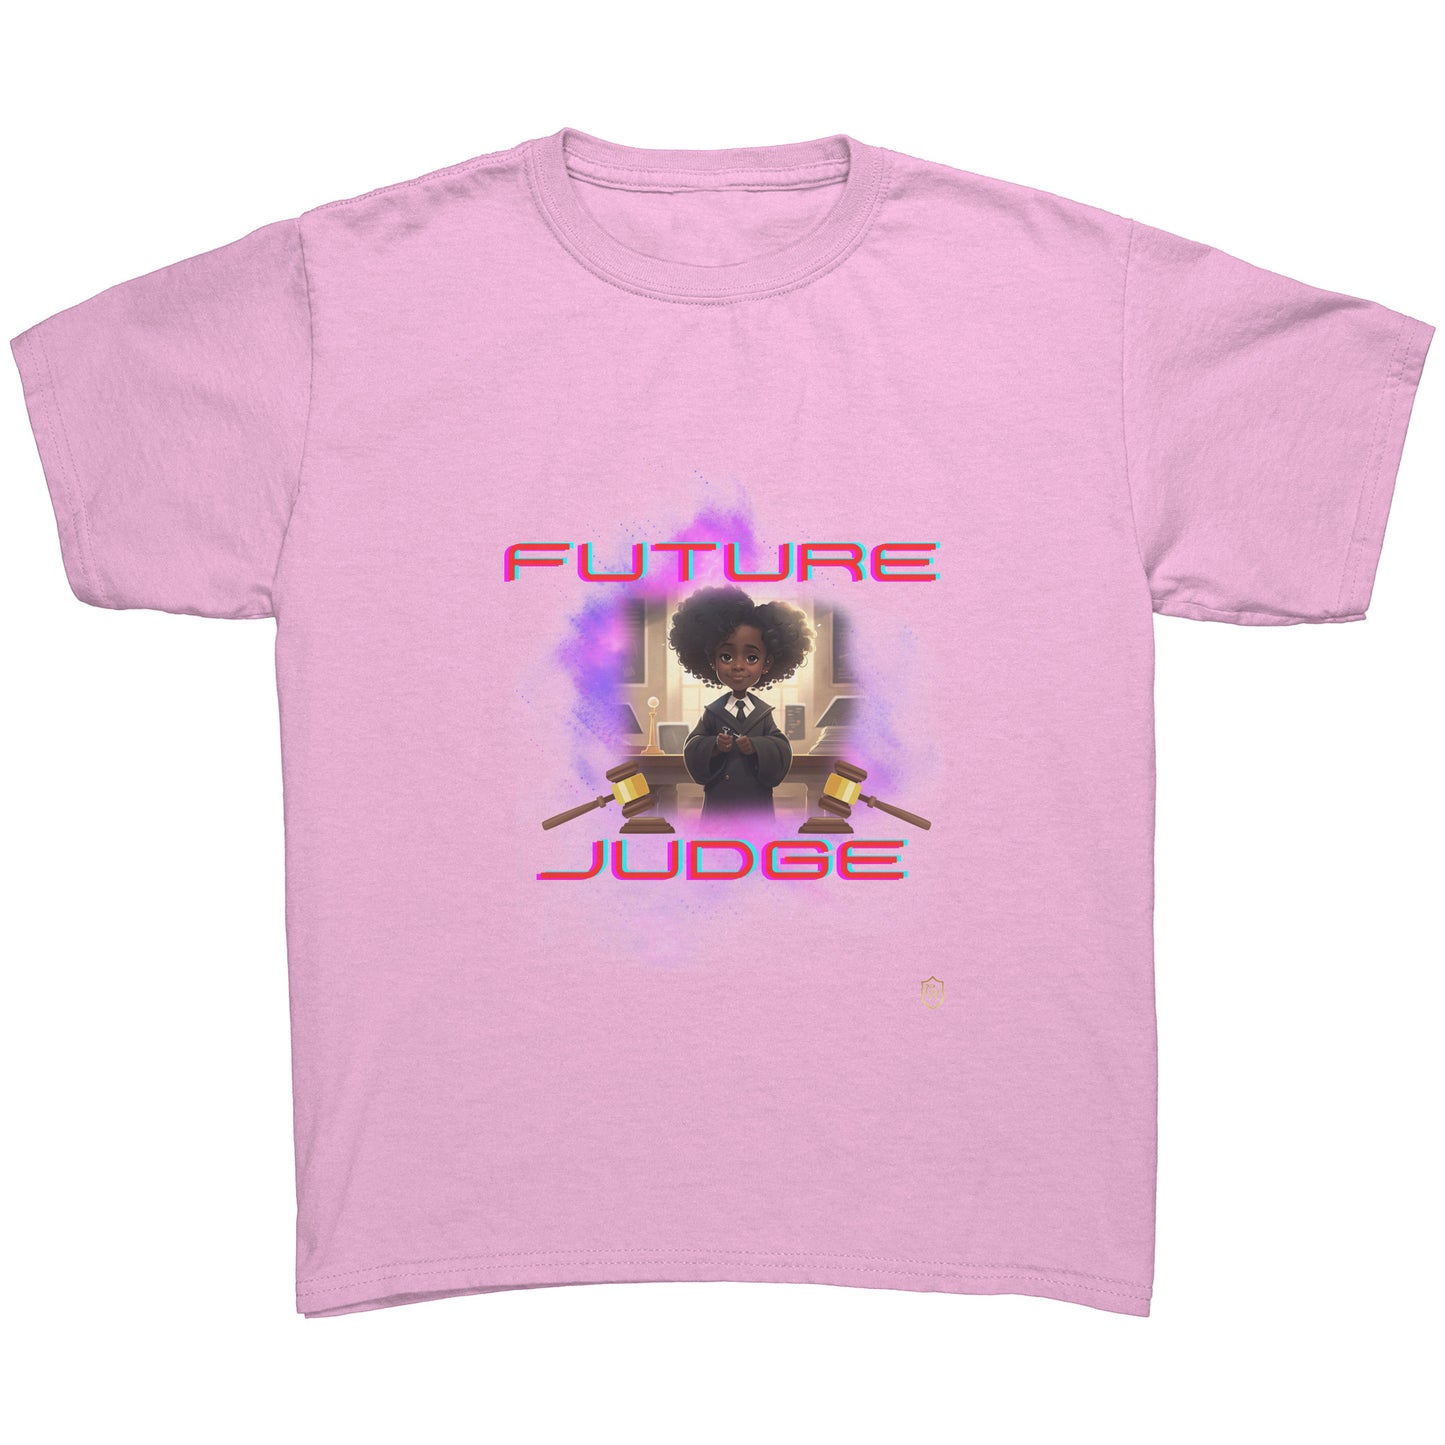 Young Girl's Future Judge T-shirt